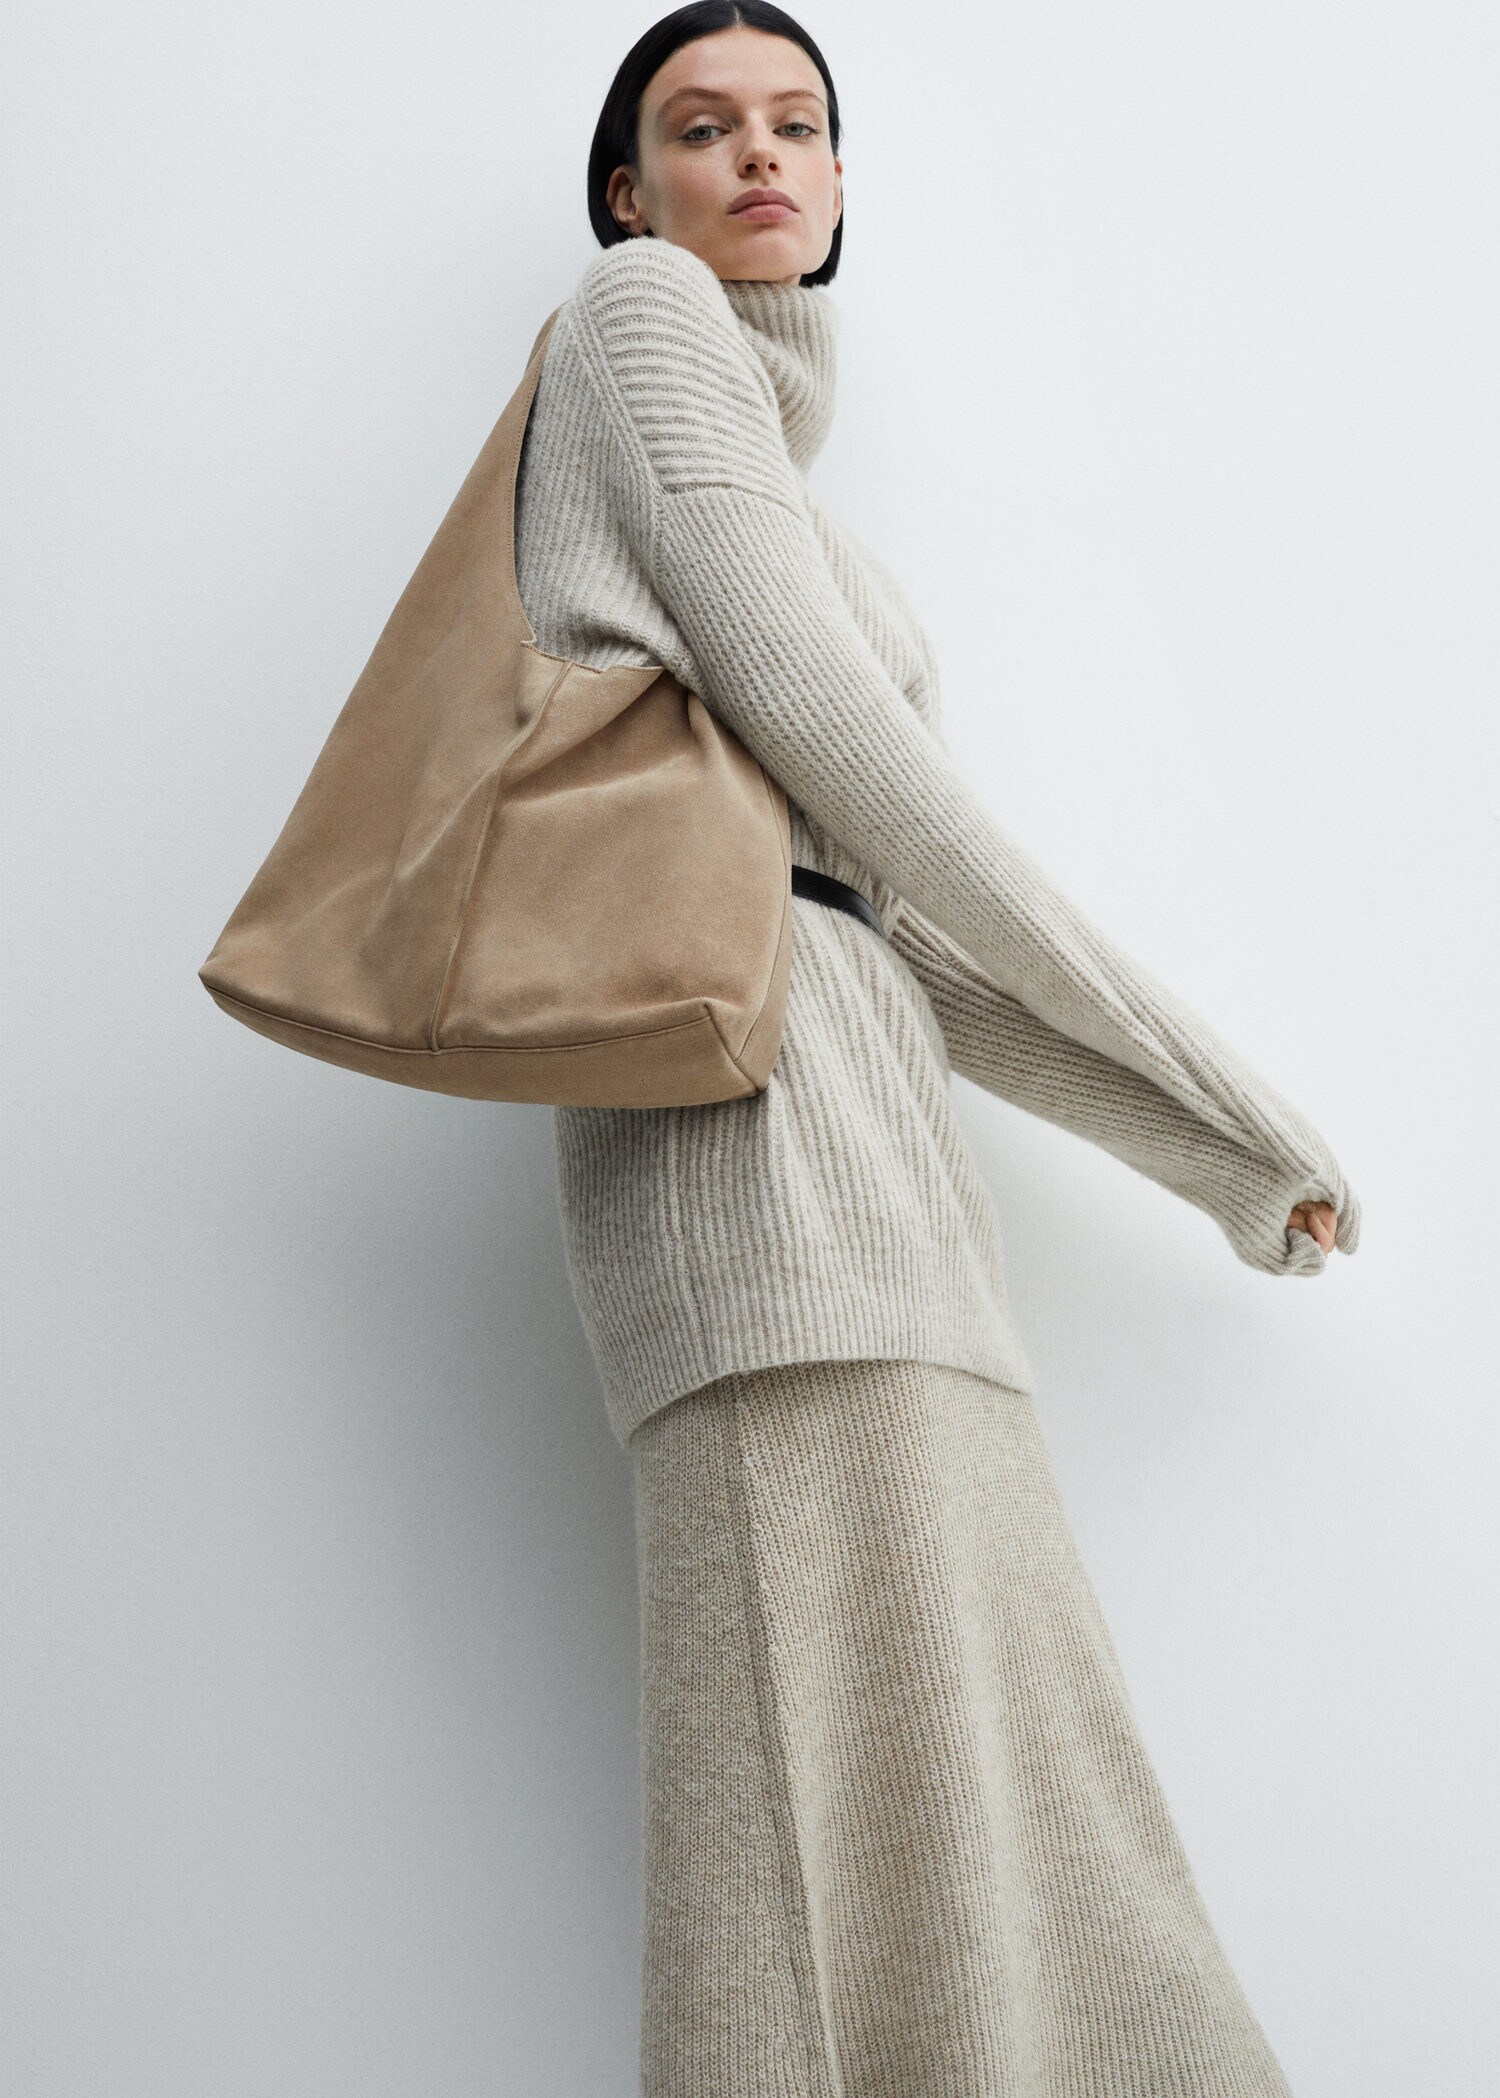 The Zara Mini City Bag: An Affordable It Bag | Bags, Zara bags, Yellow  handbag